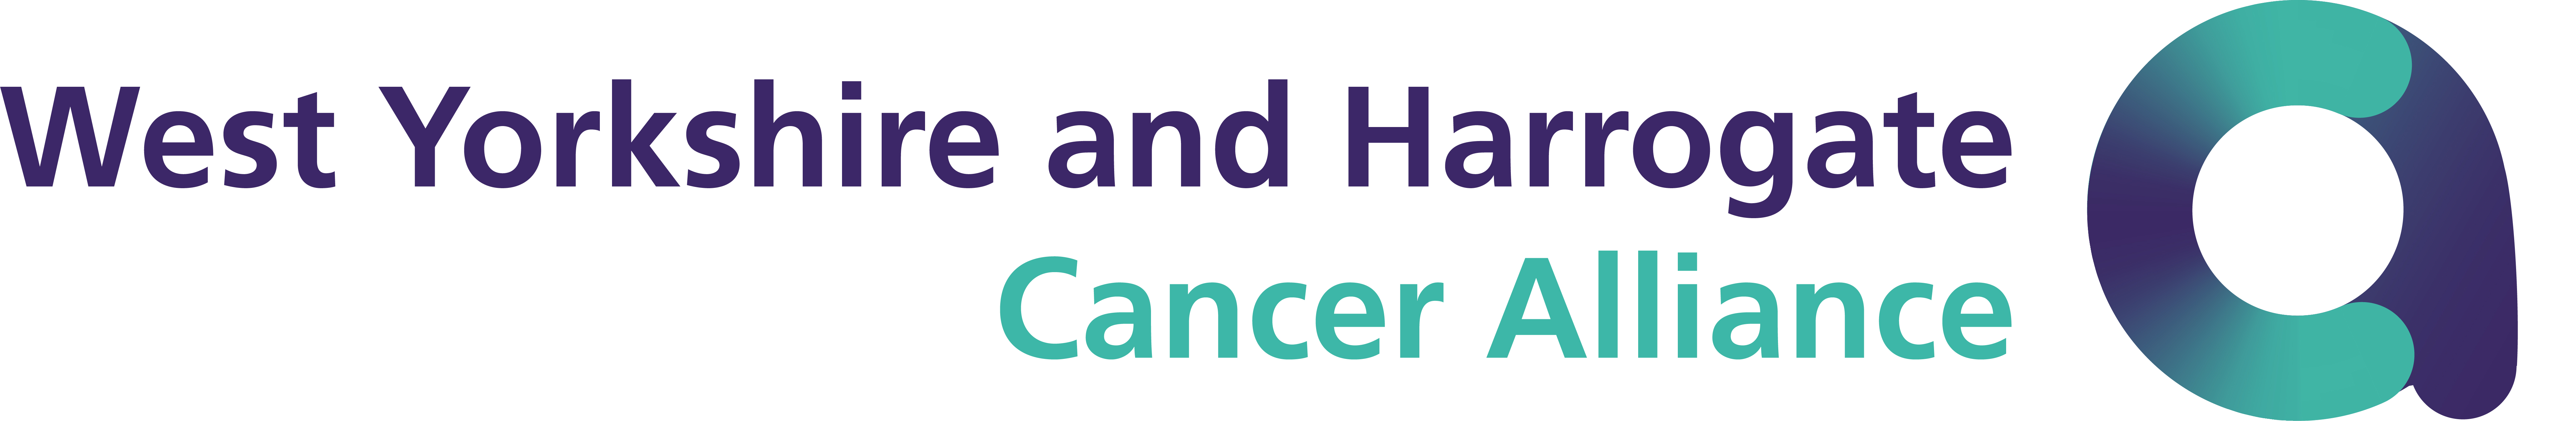 Cancer Alliance Logo.jpg